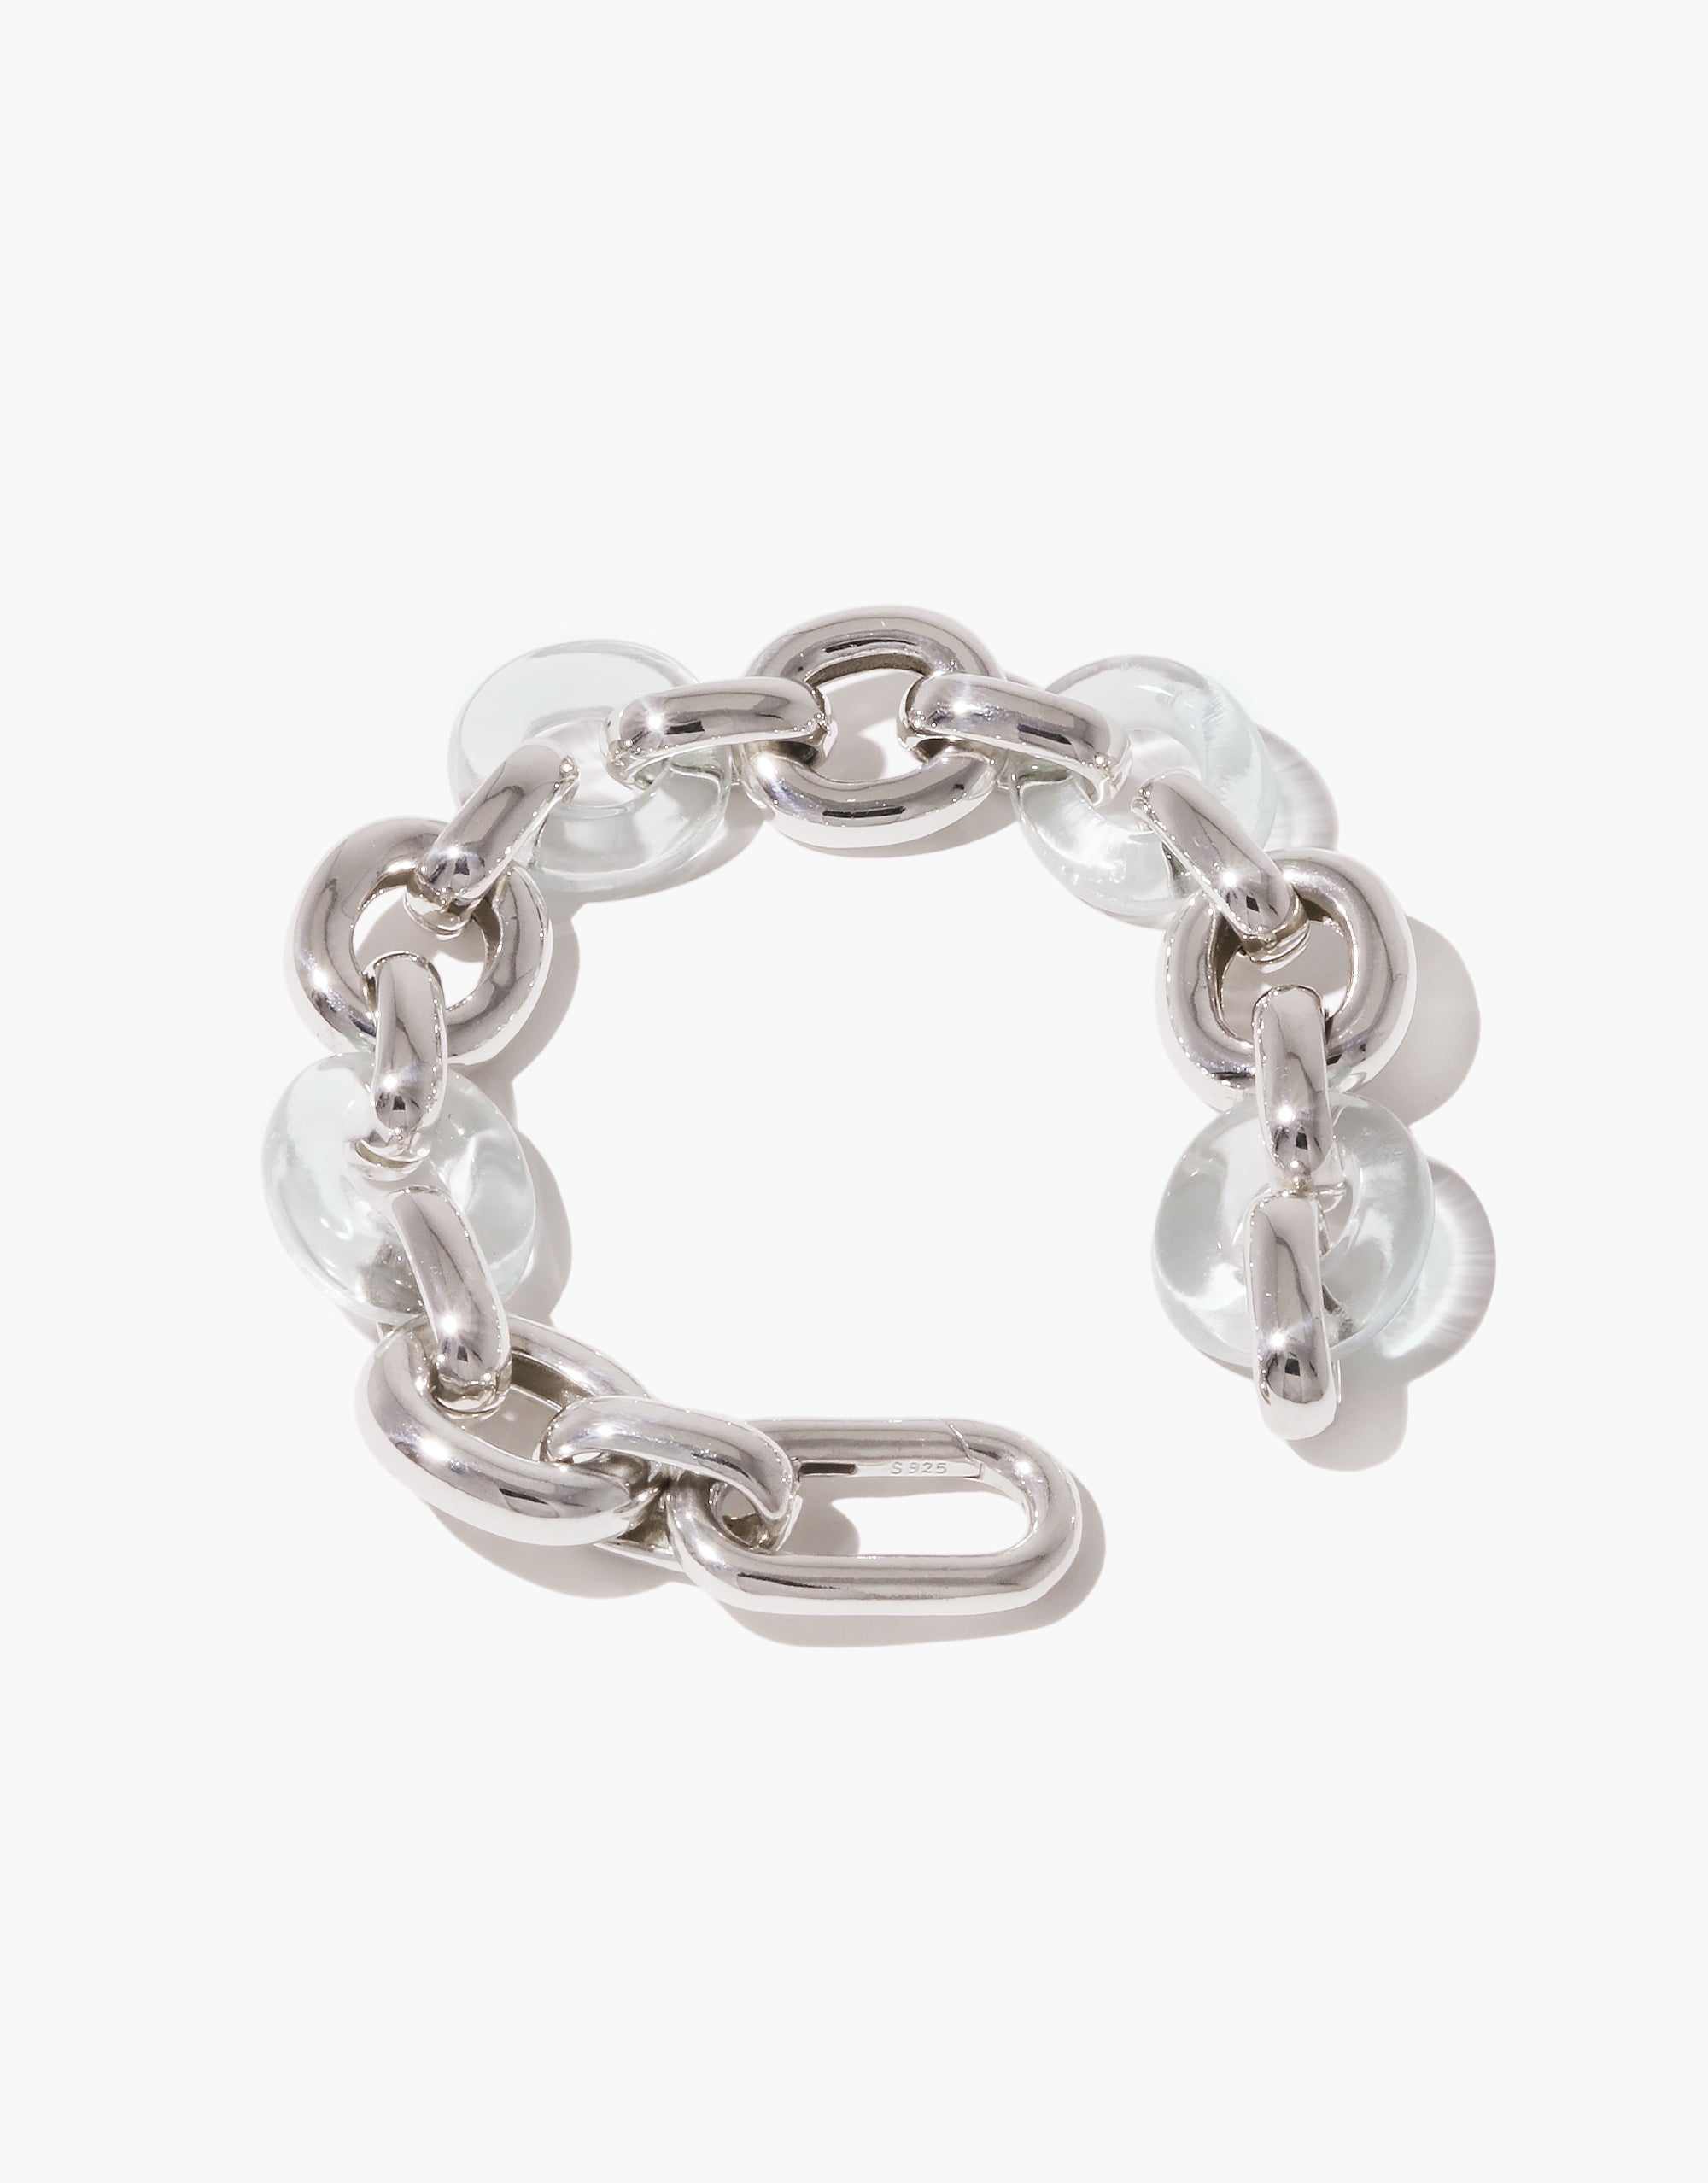 Connected Loop Bracelet | Mixed Metal & Glass